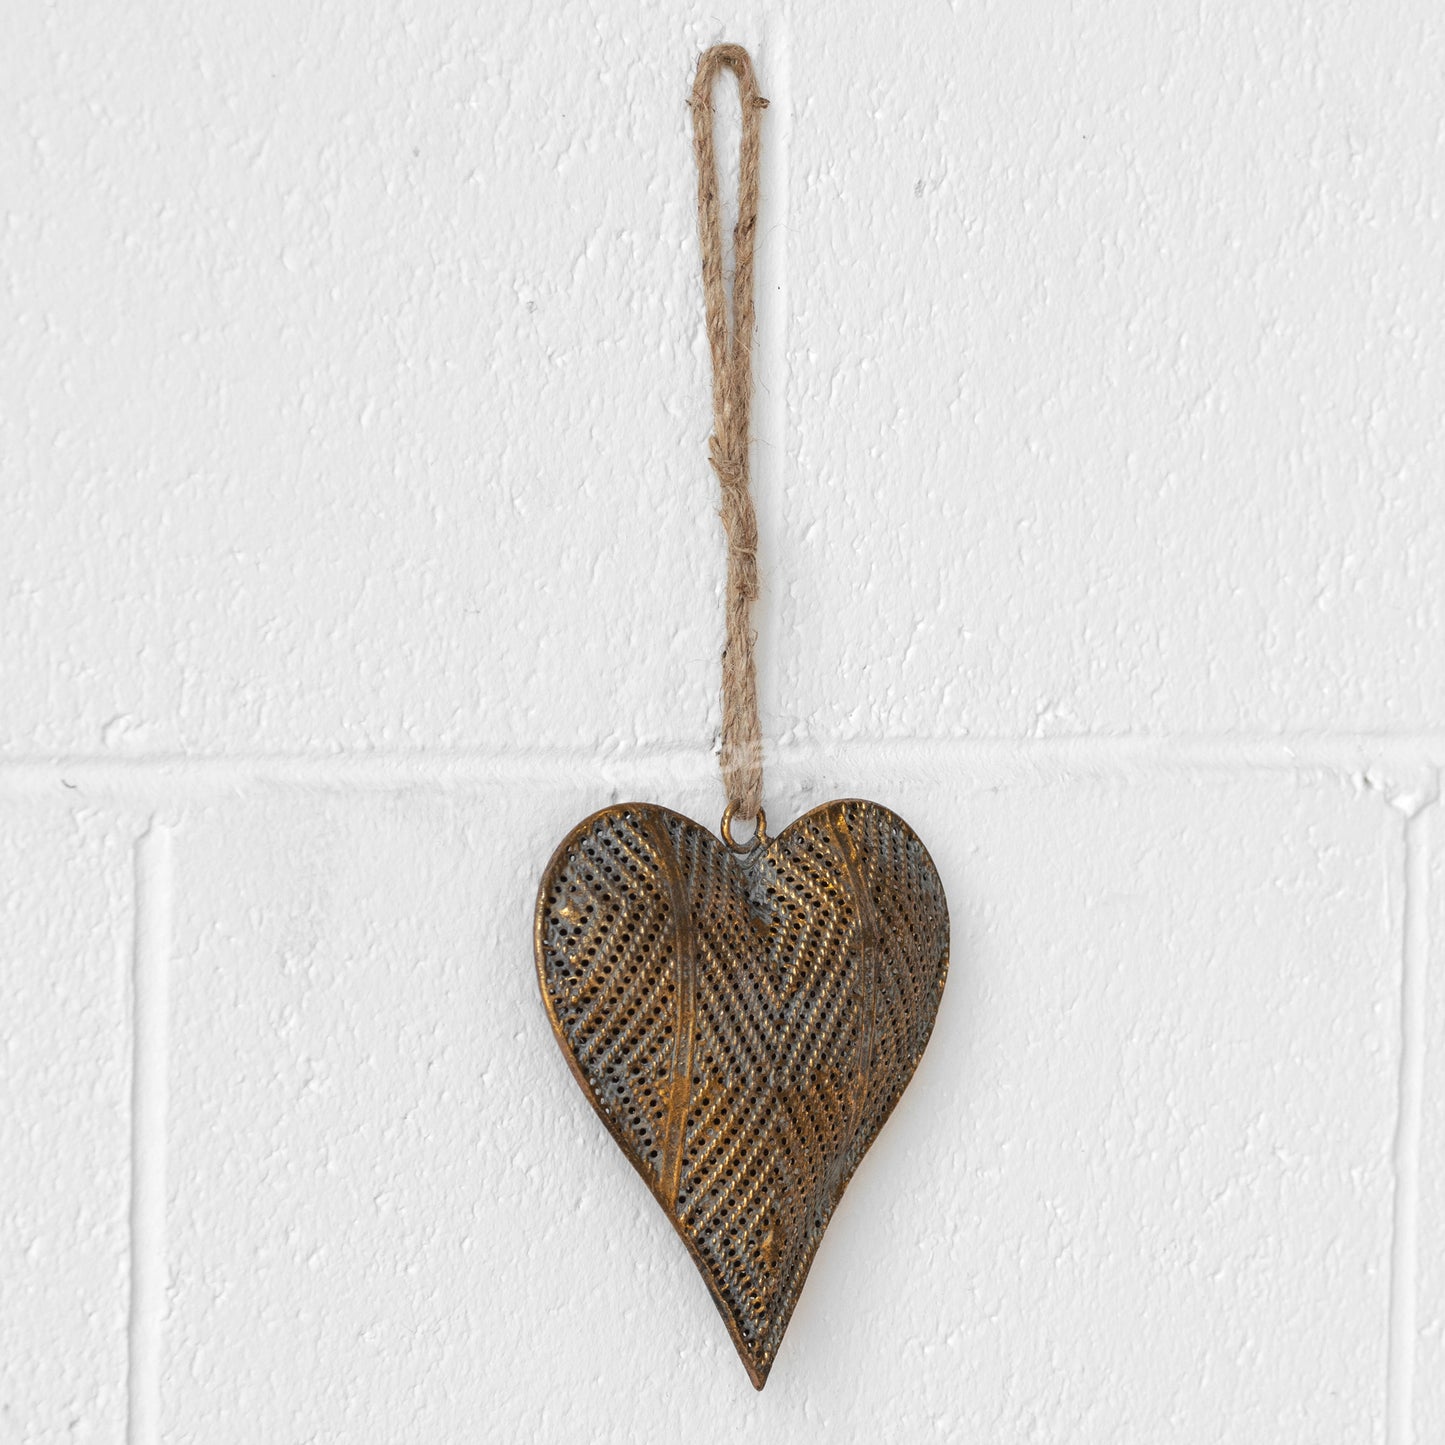 Hanging Heart Decoration Metal Ornament